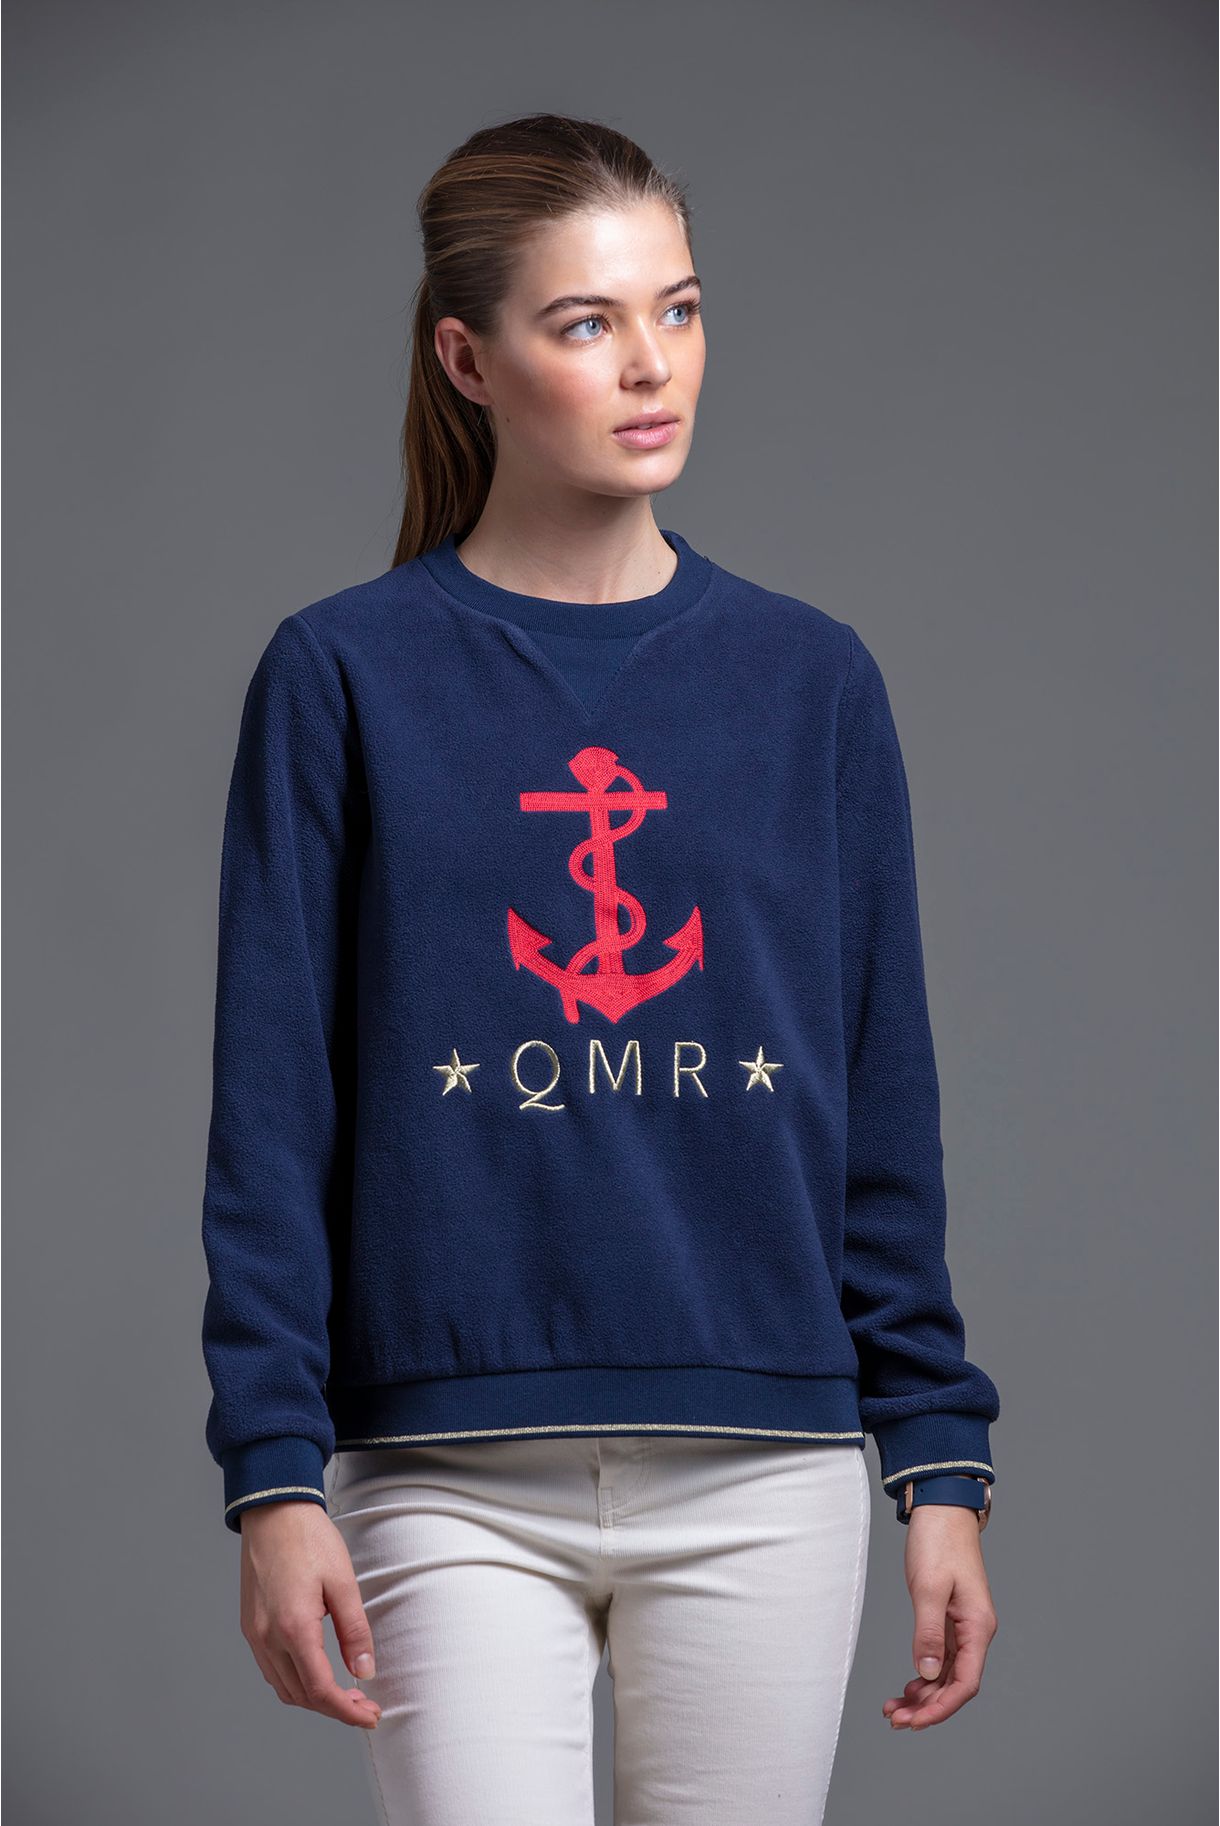 Polar with anchor embroidery